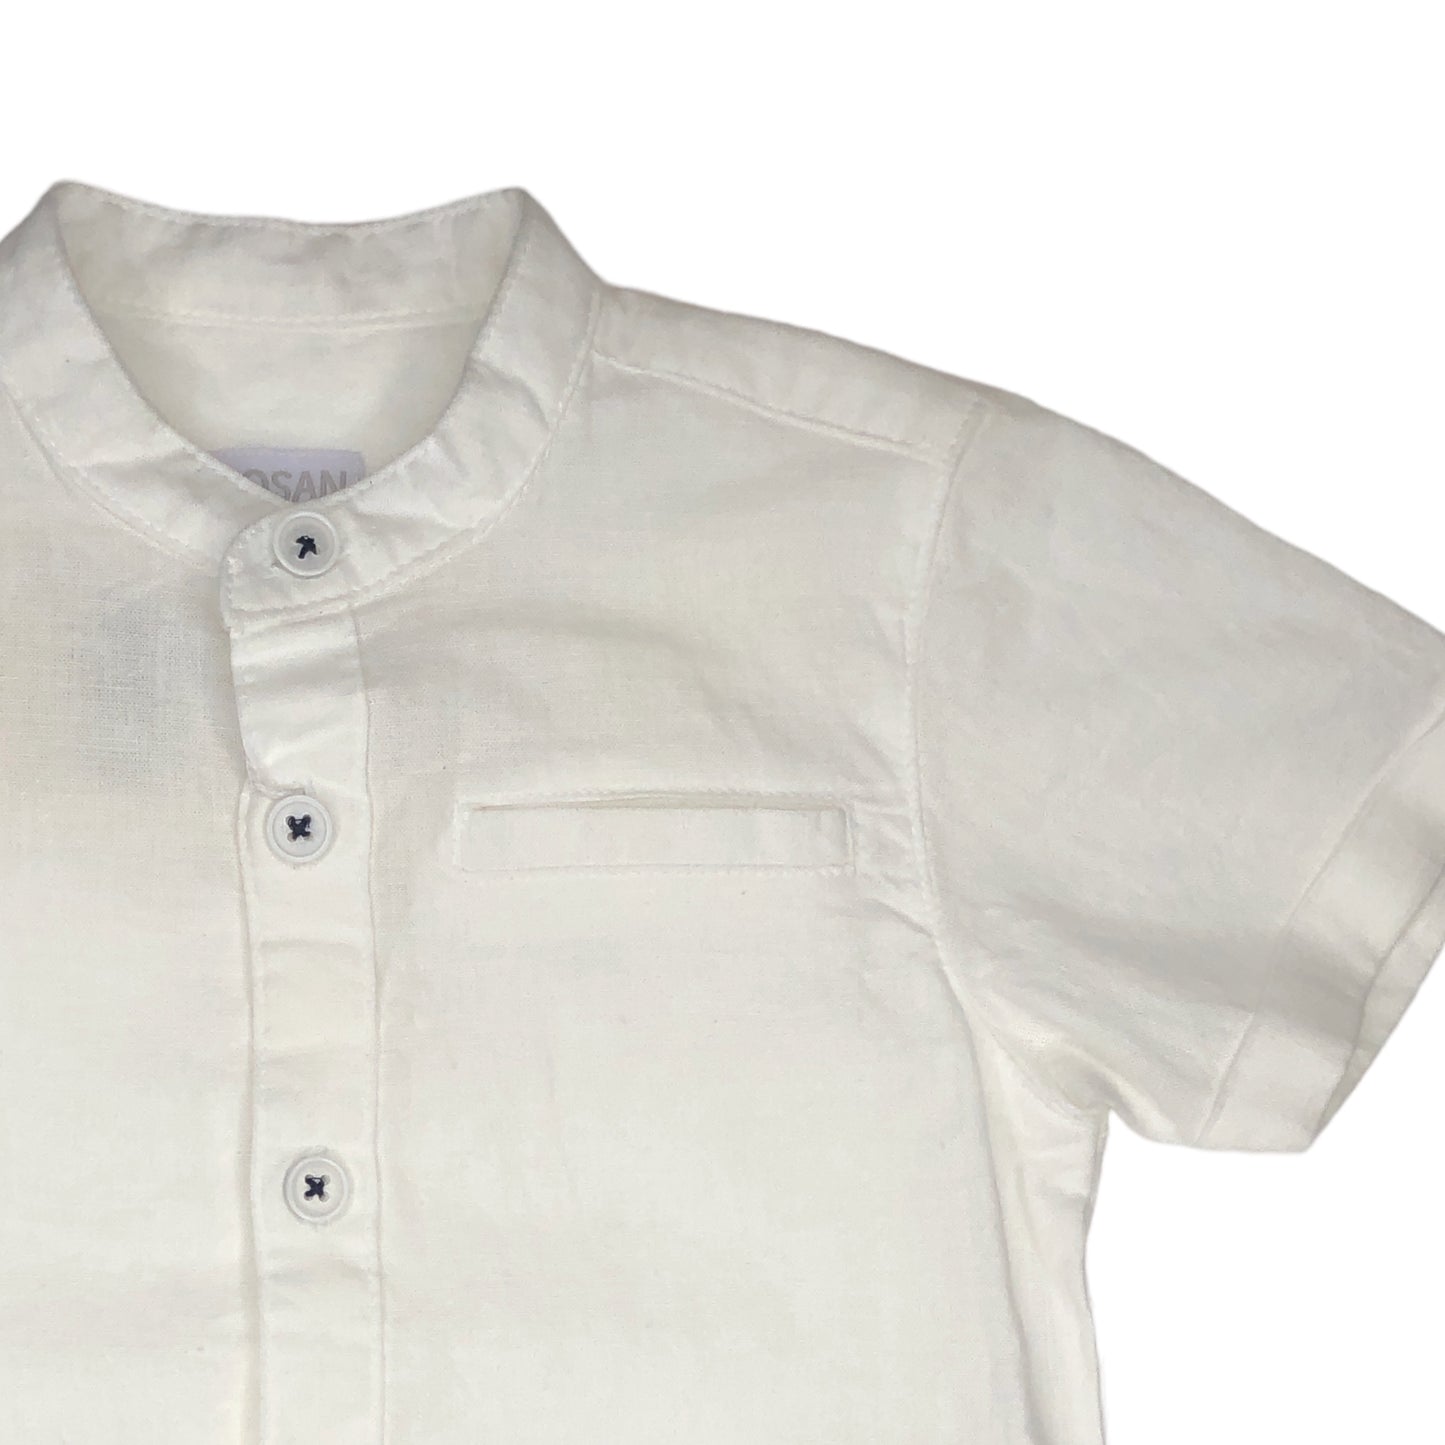 Camisa manga corta blanca para bebé niño Losan